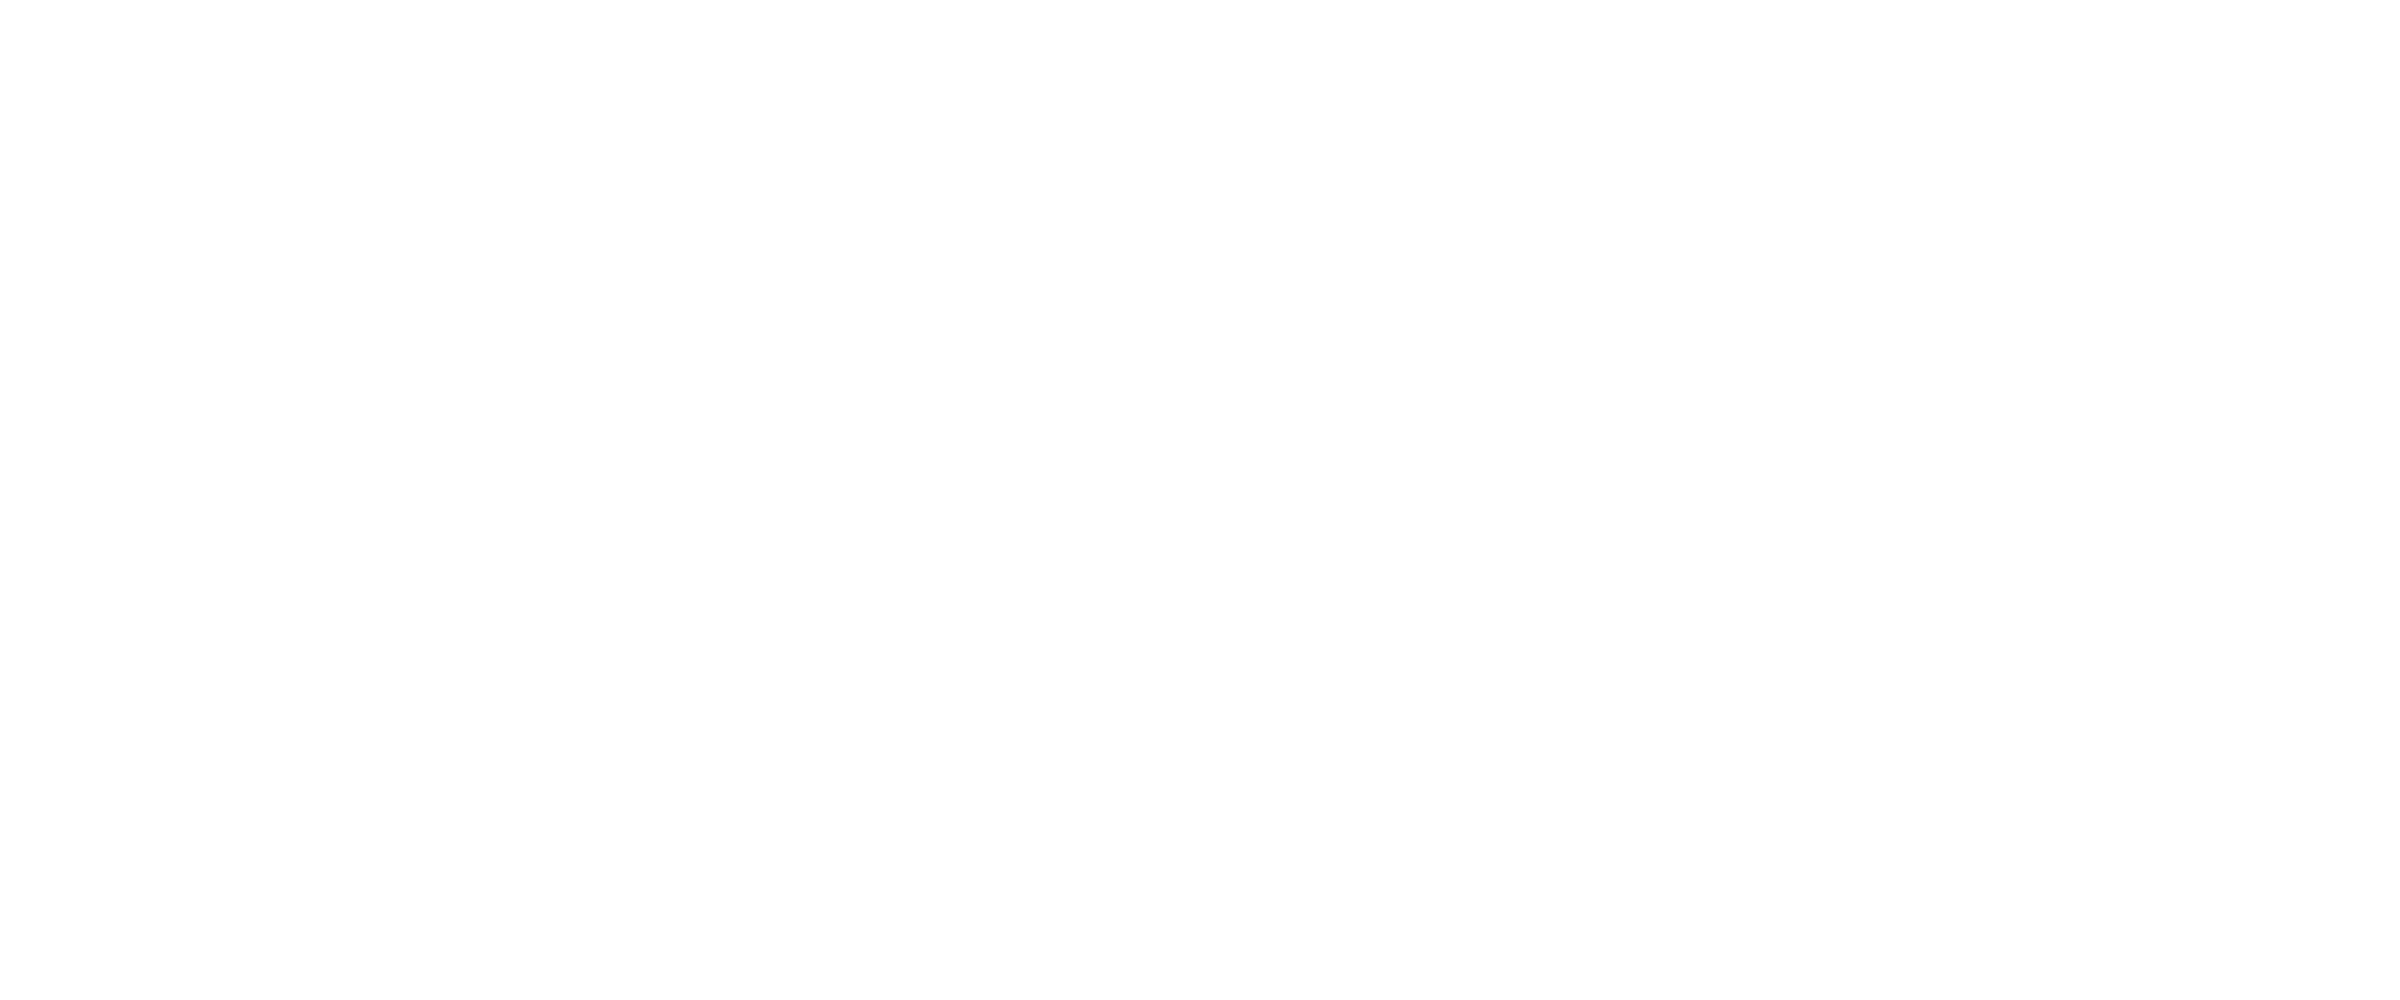 Communities Initiatives Fund Logo